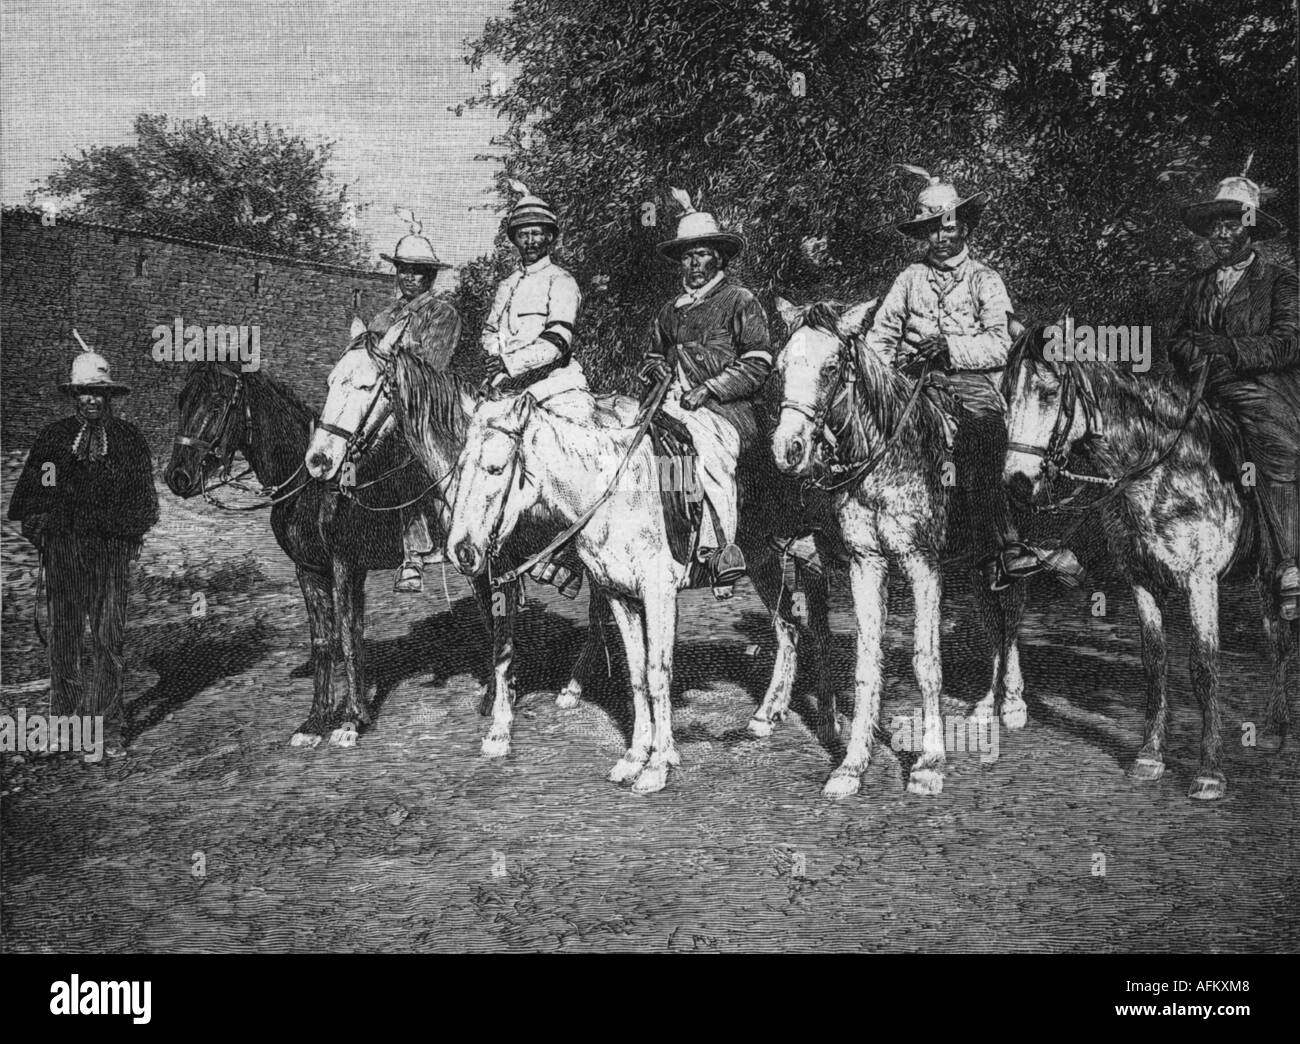 Witboi, Hendrik, + 1905, Herrero leader, with his son Hendrik and Samuel Isaak, engraving, Stock Photo